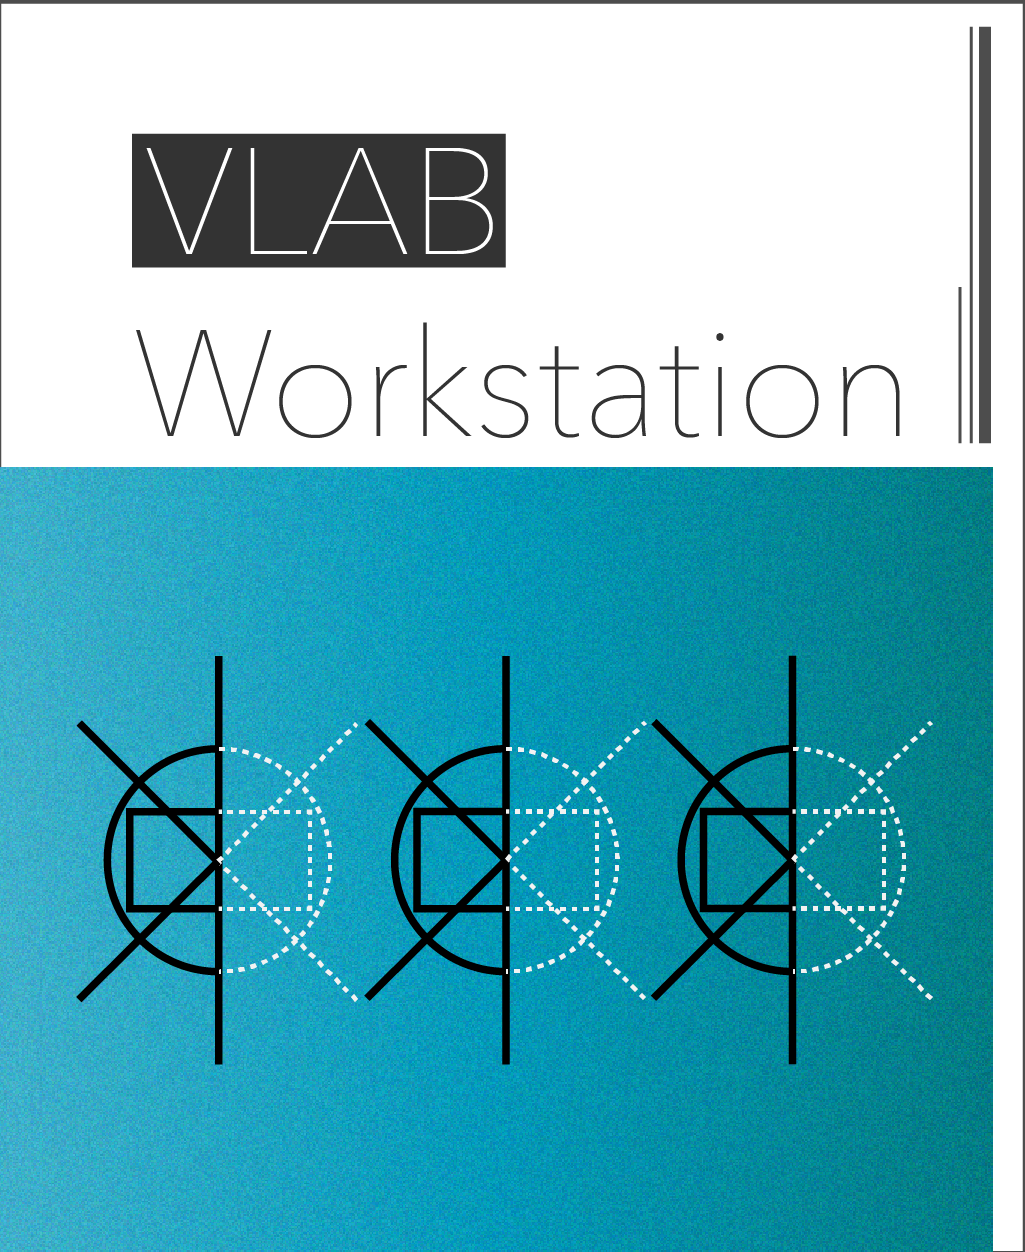 VLAB Workstation